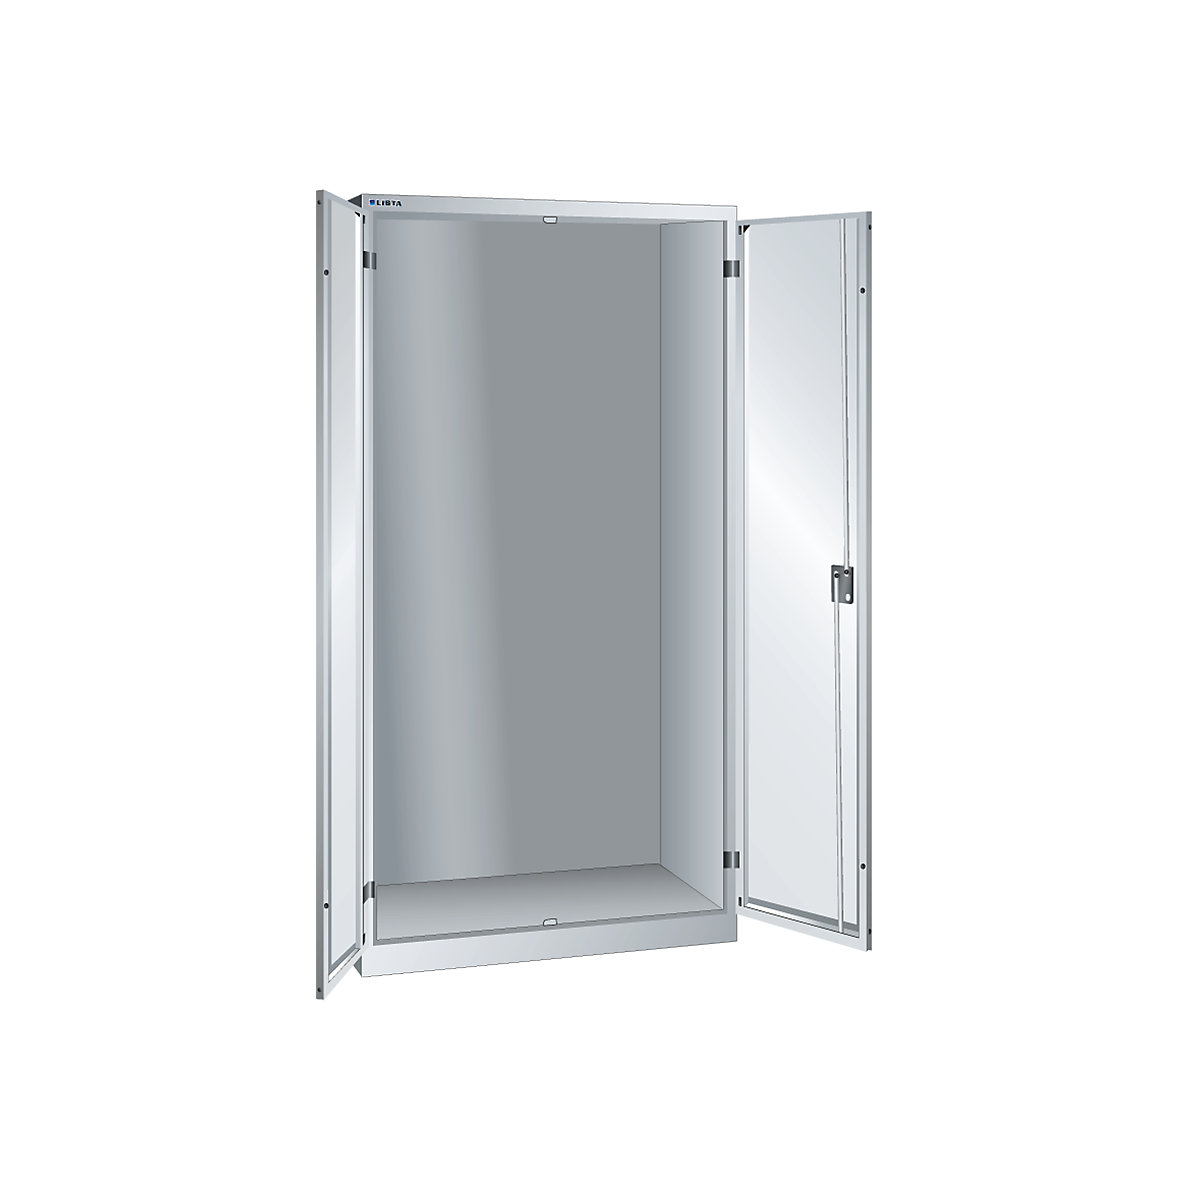 Skříň s otočnými dveřmi, v x š x h 1950 x 1000 x 580 mm – LISTA (Obrázek výrobku 7)-6